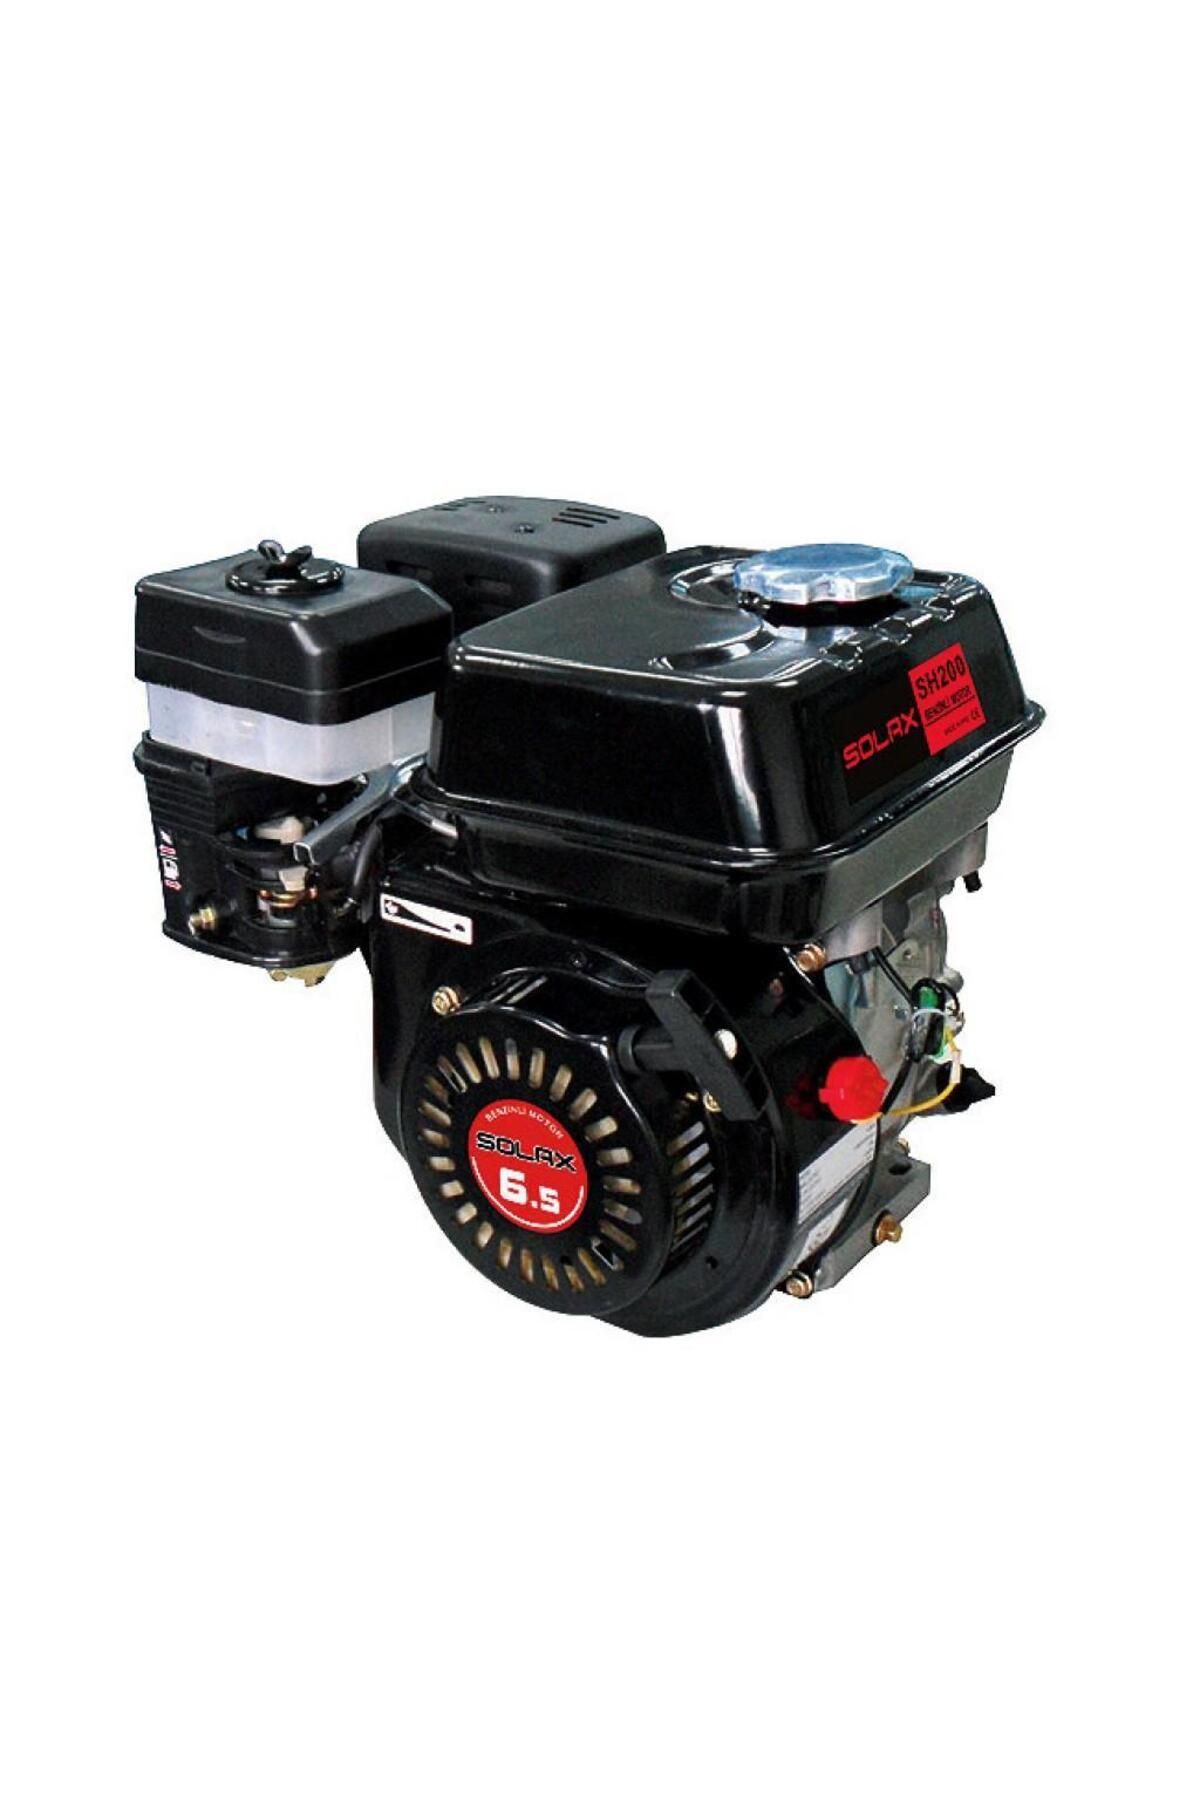 Solax SH200 Benzinli Motor 6.5Hp 4 Zamanlı